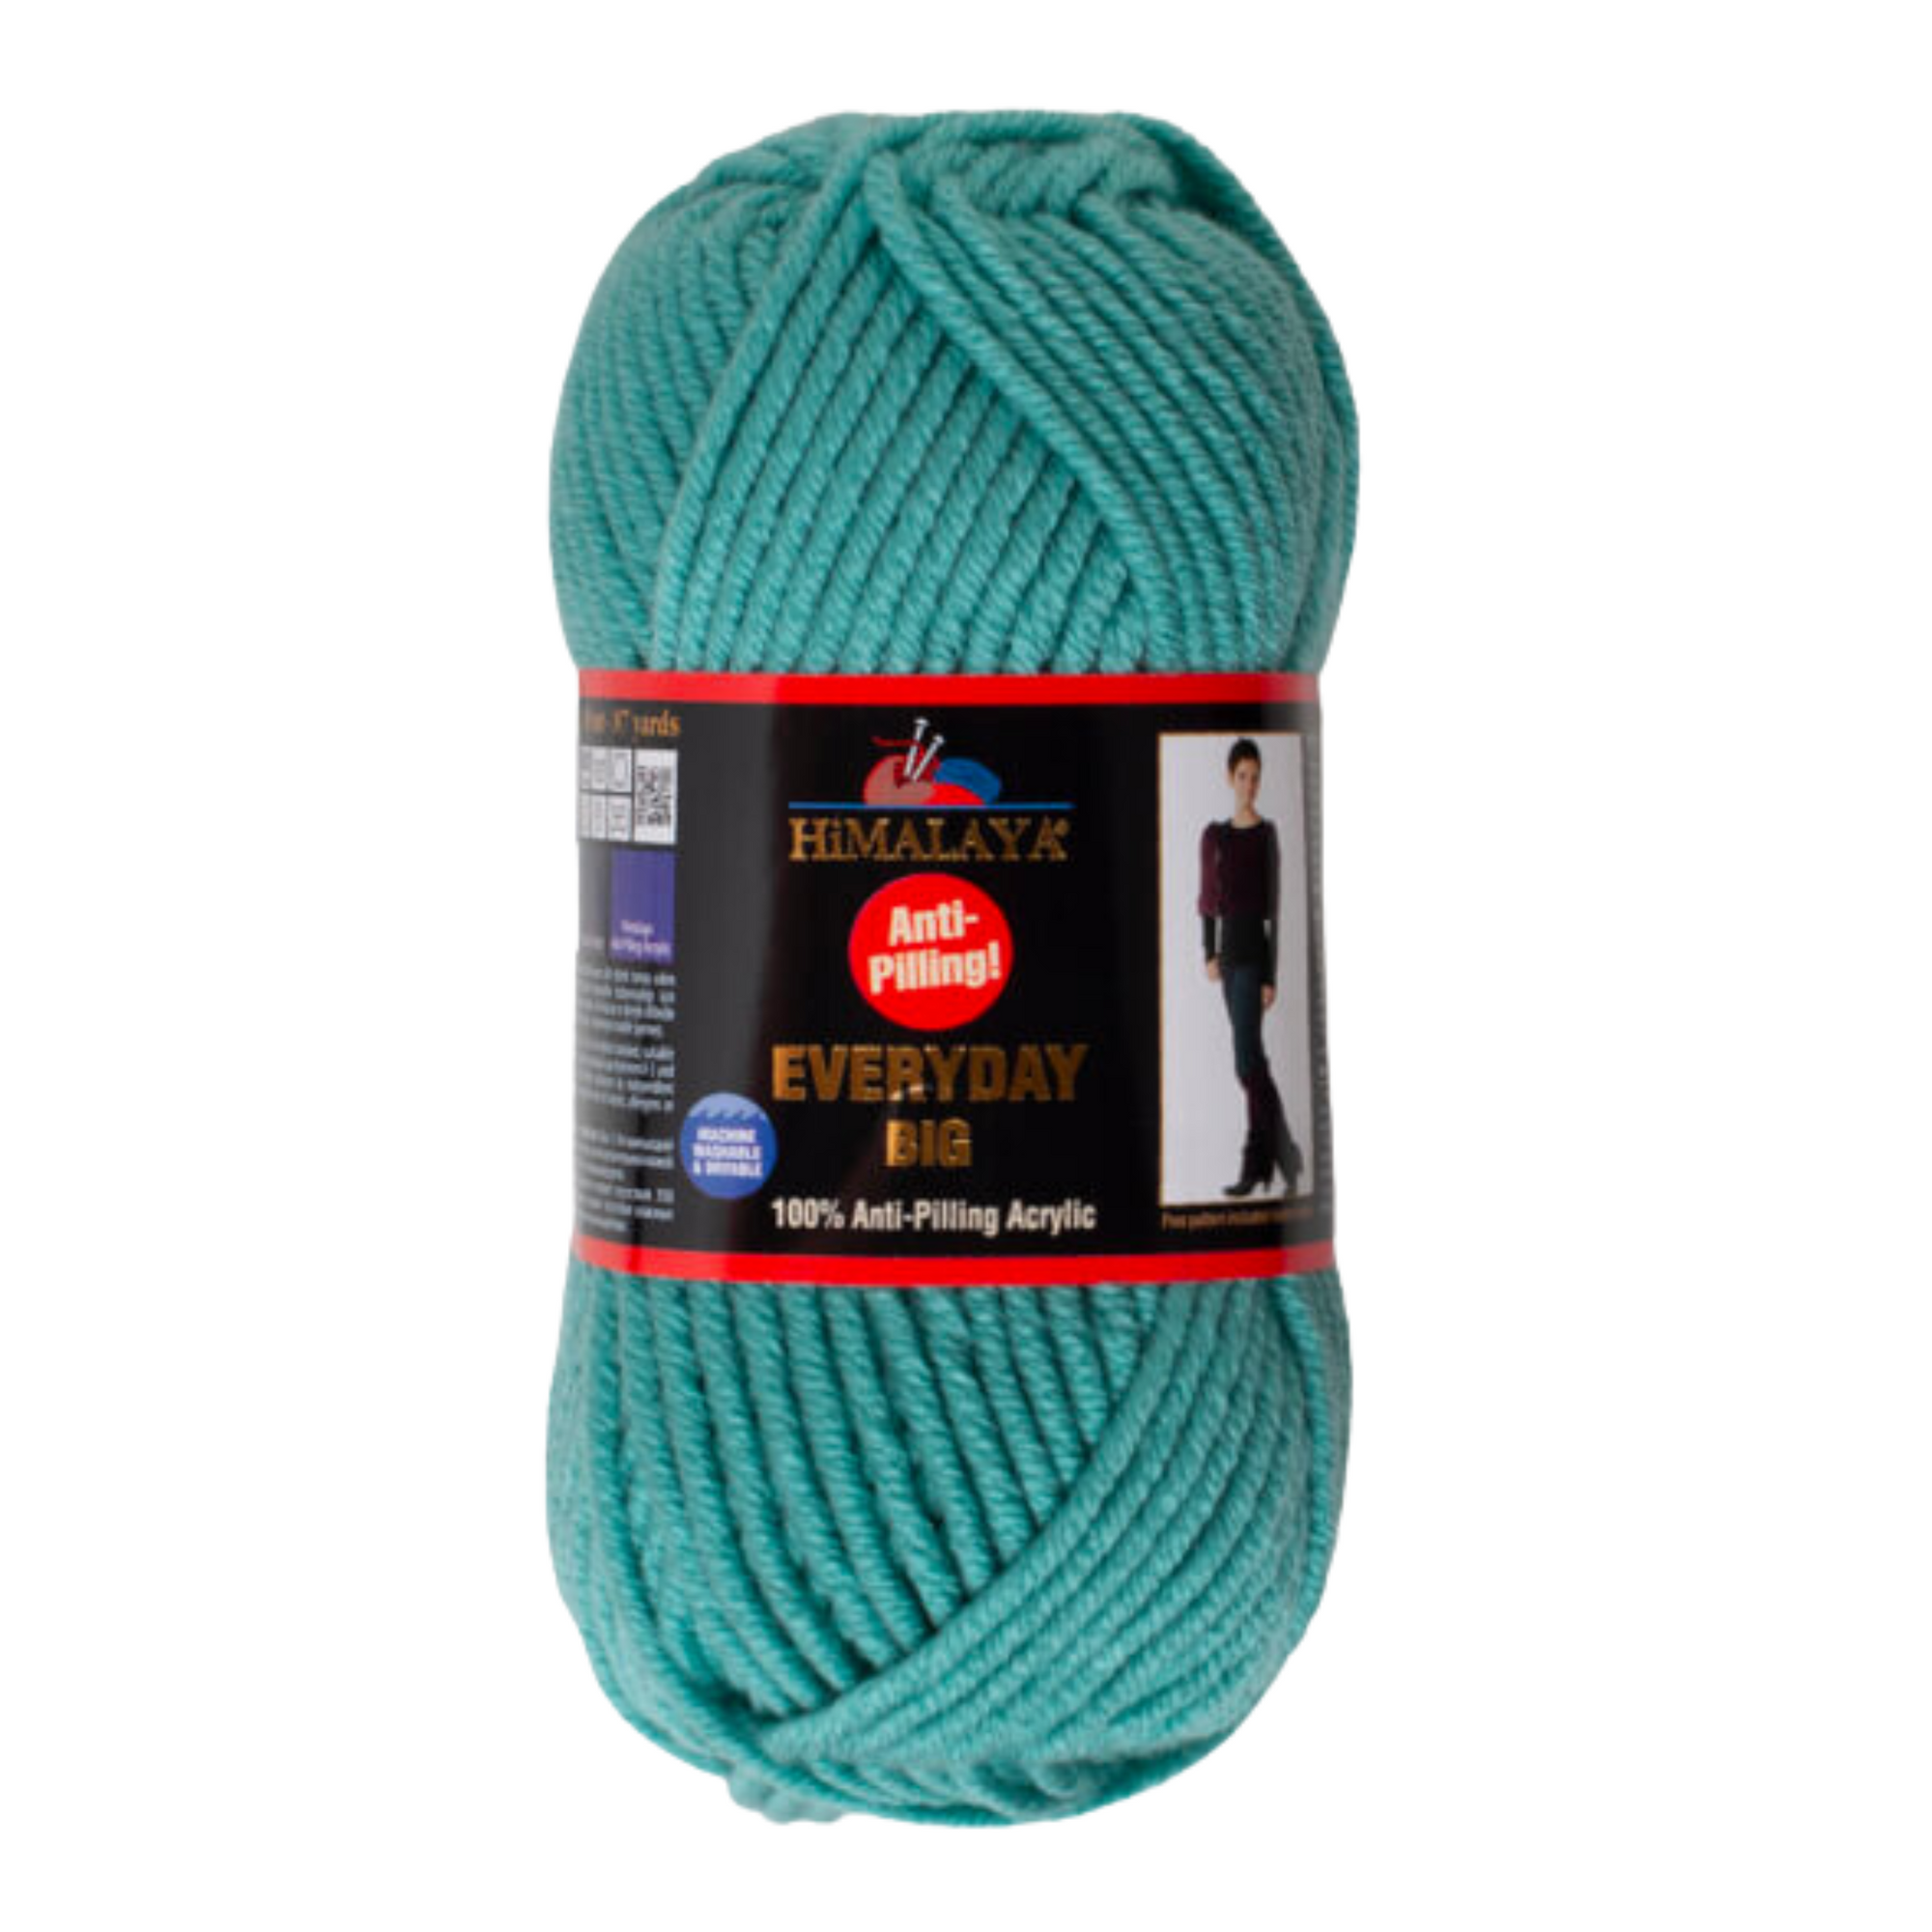 Himalaya Everyday 100% Anti-Pilling Acrylic Yarn, Forest Green - 70818